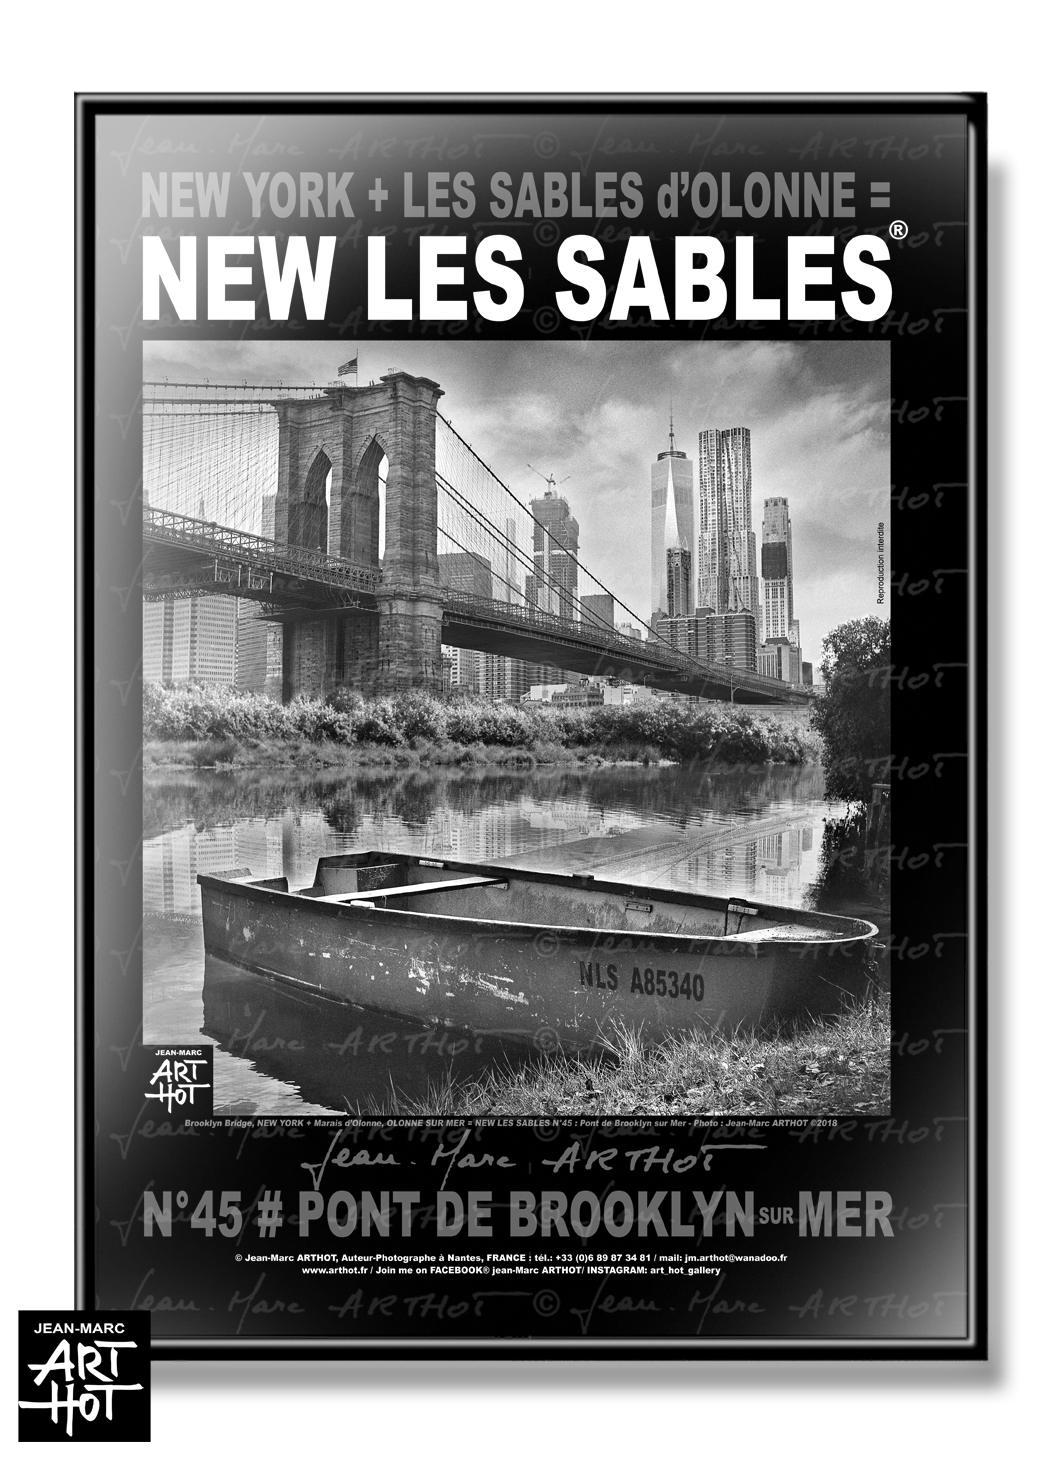 arthot-photo-art-b&w-new-york-vendee-sables-olonne-newlessables-045-barque-pont-brooklyn-AFFICHE